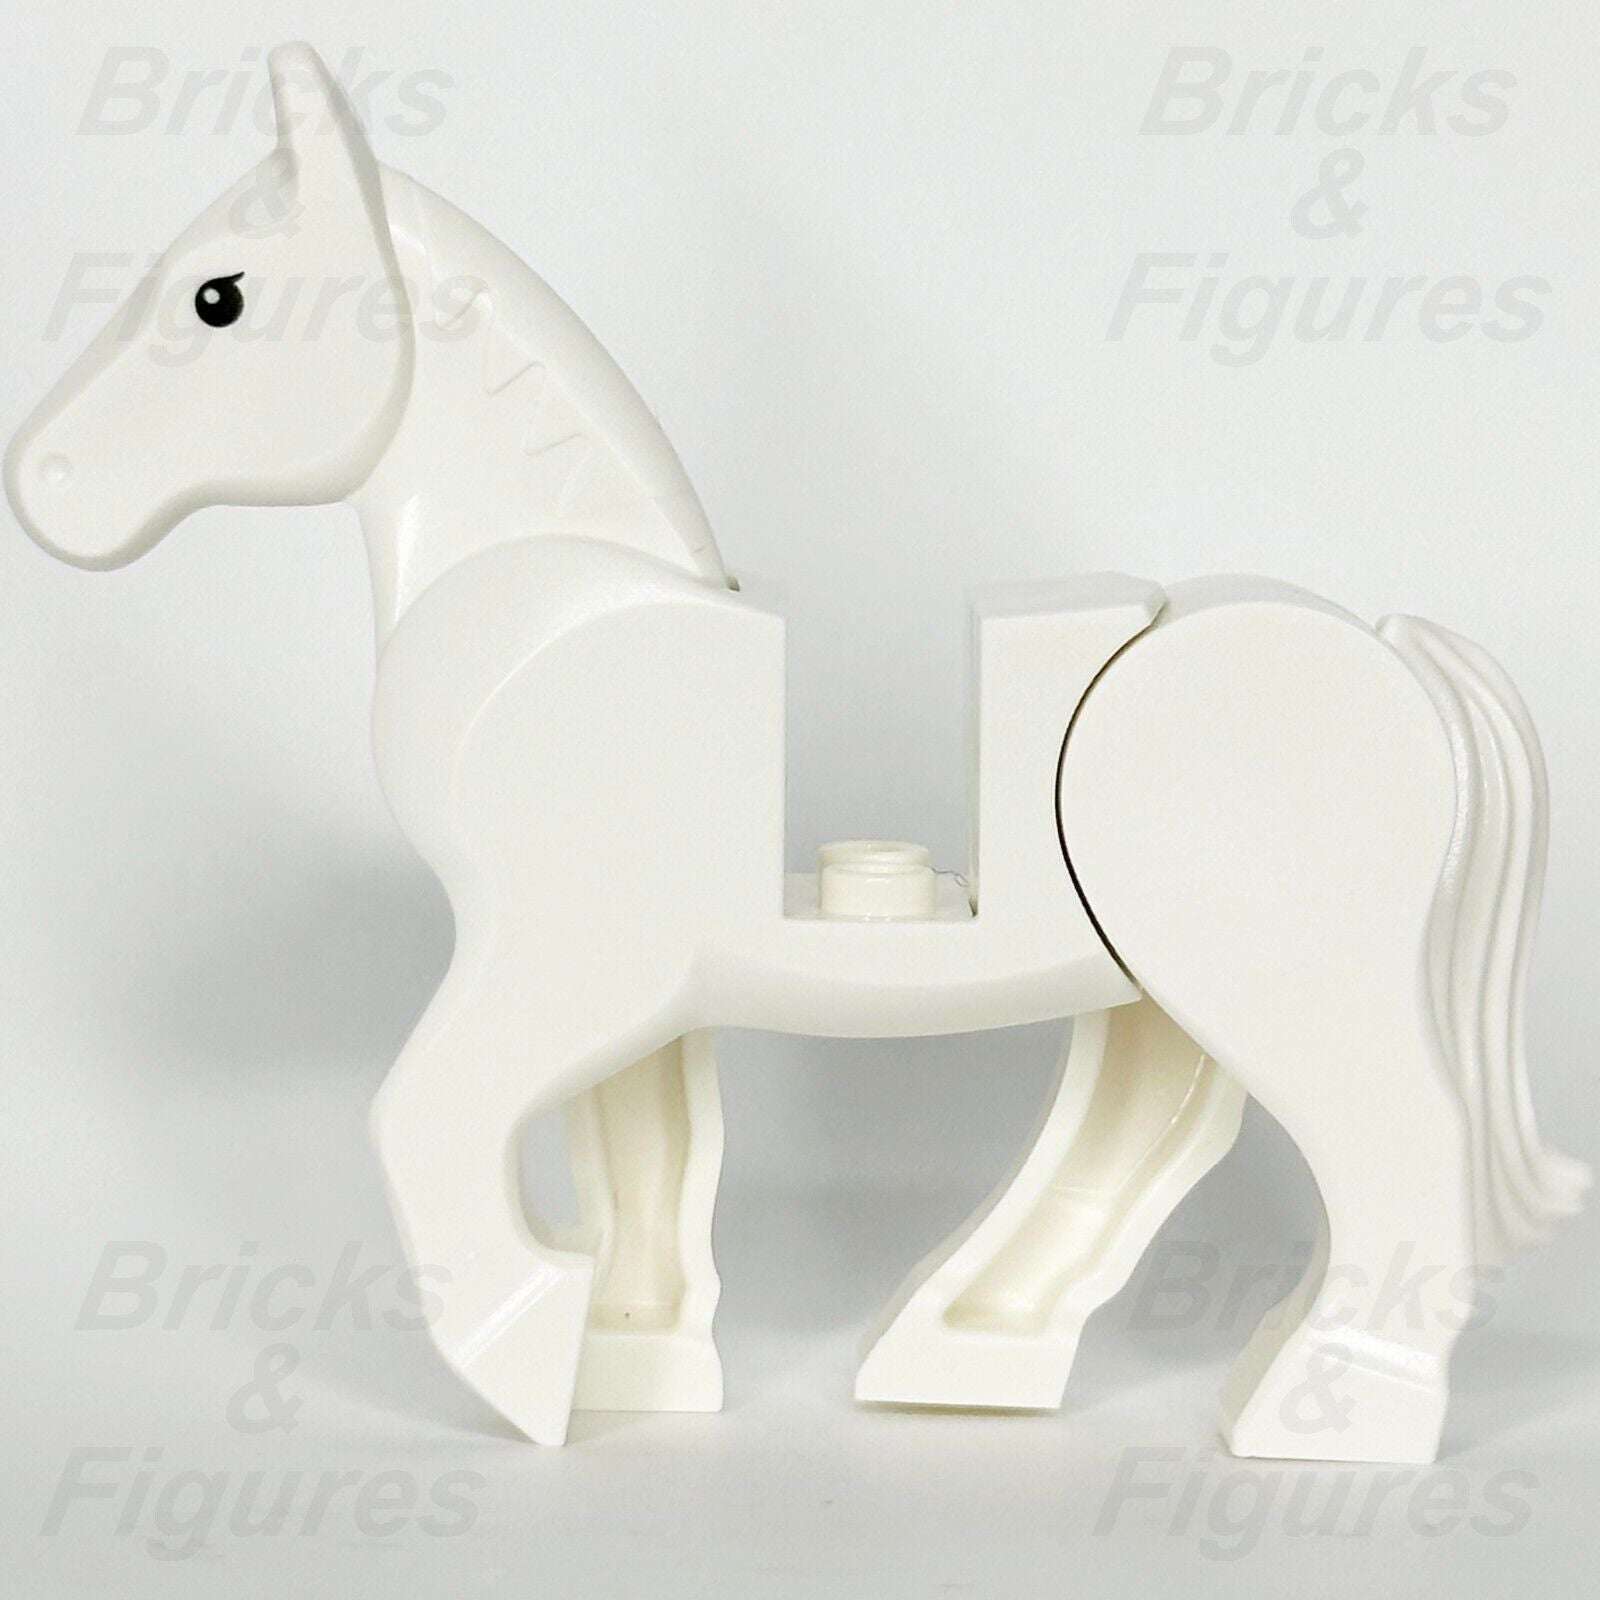 LEGO White Horse Minifigure Animal Part Movable Legs 76266 10352c01pb09 Minifig